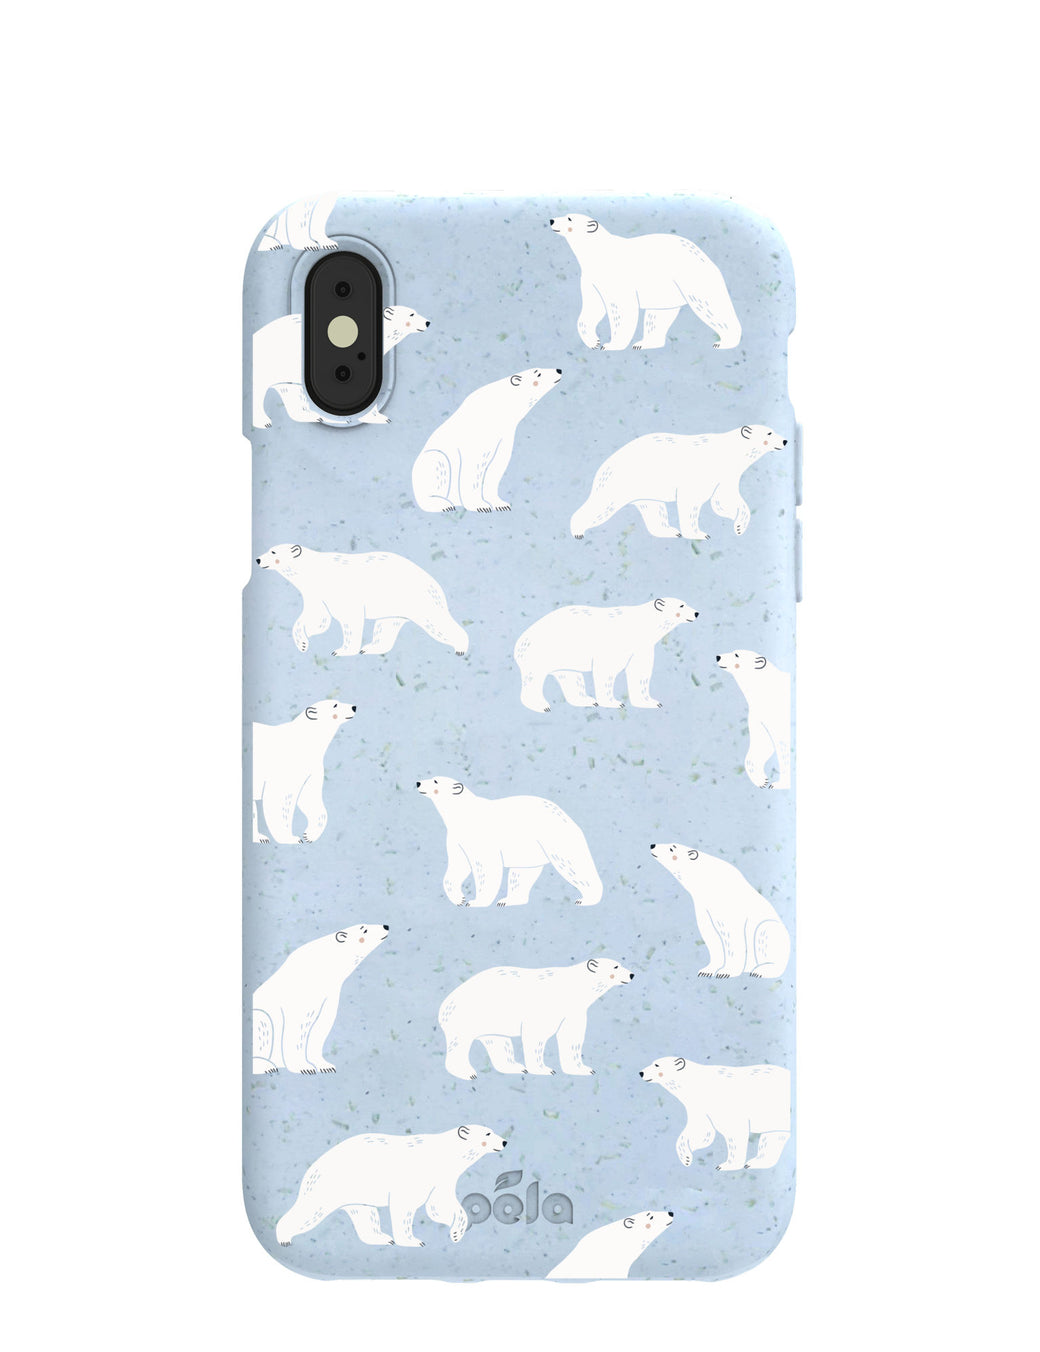 Powder Blue Ice Bears iPhone X Case